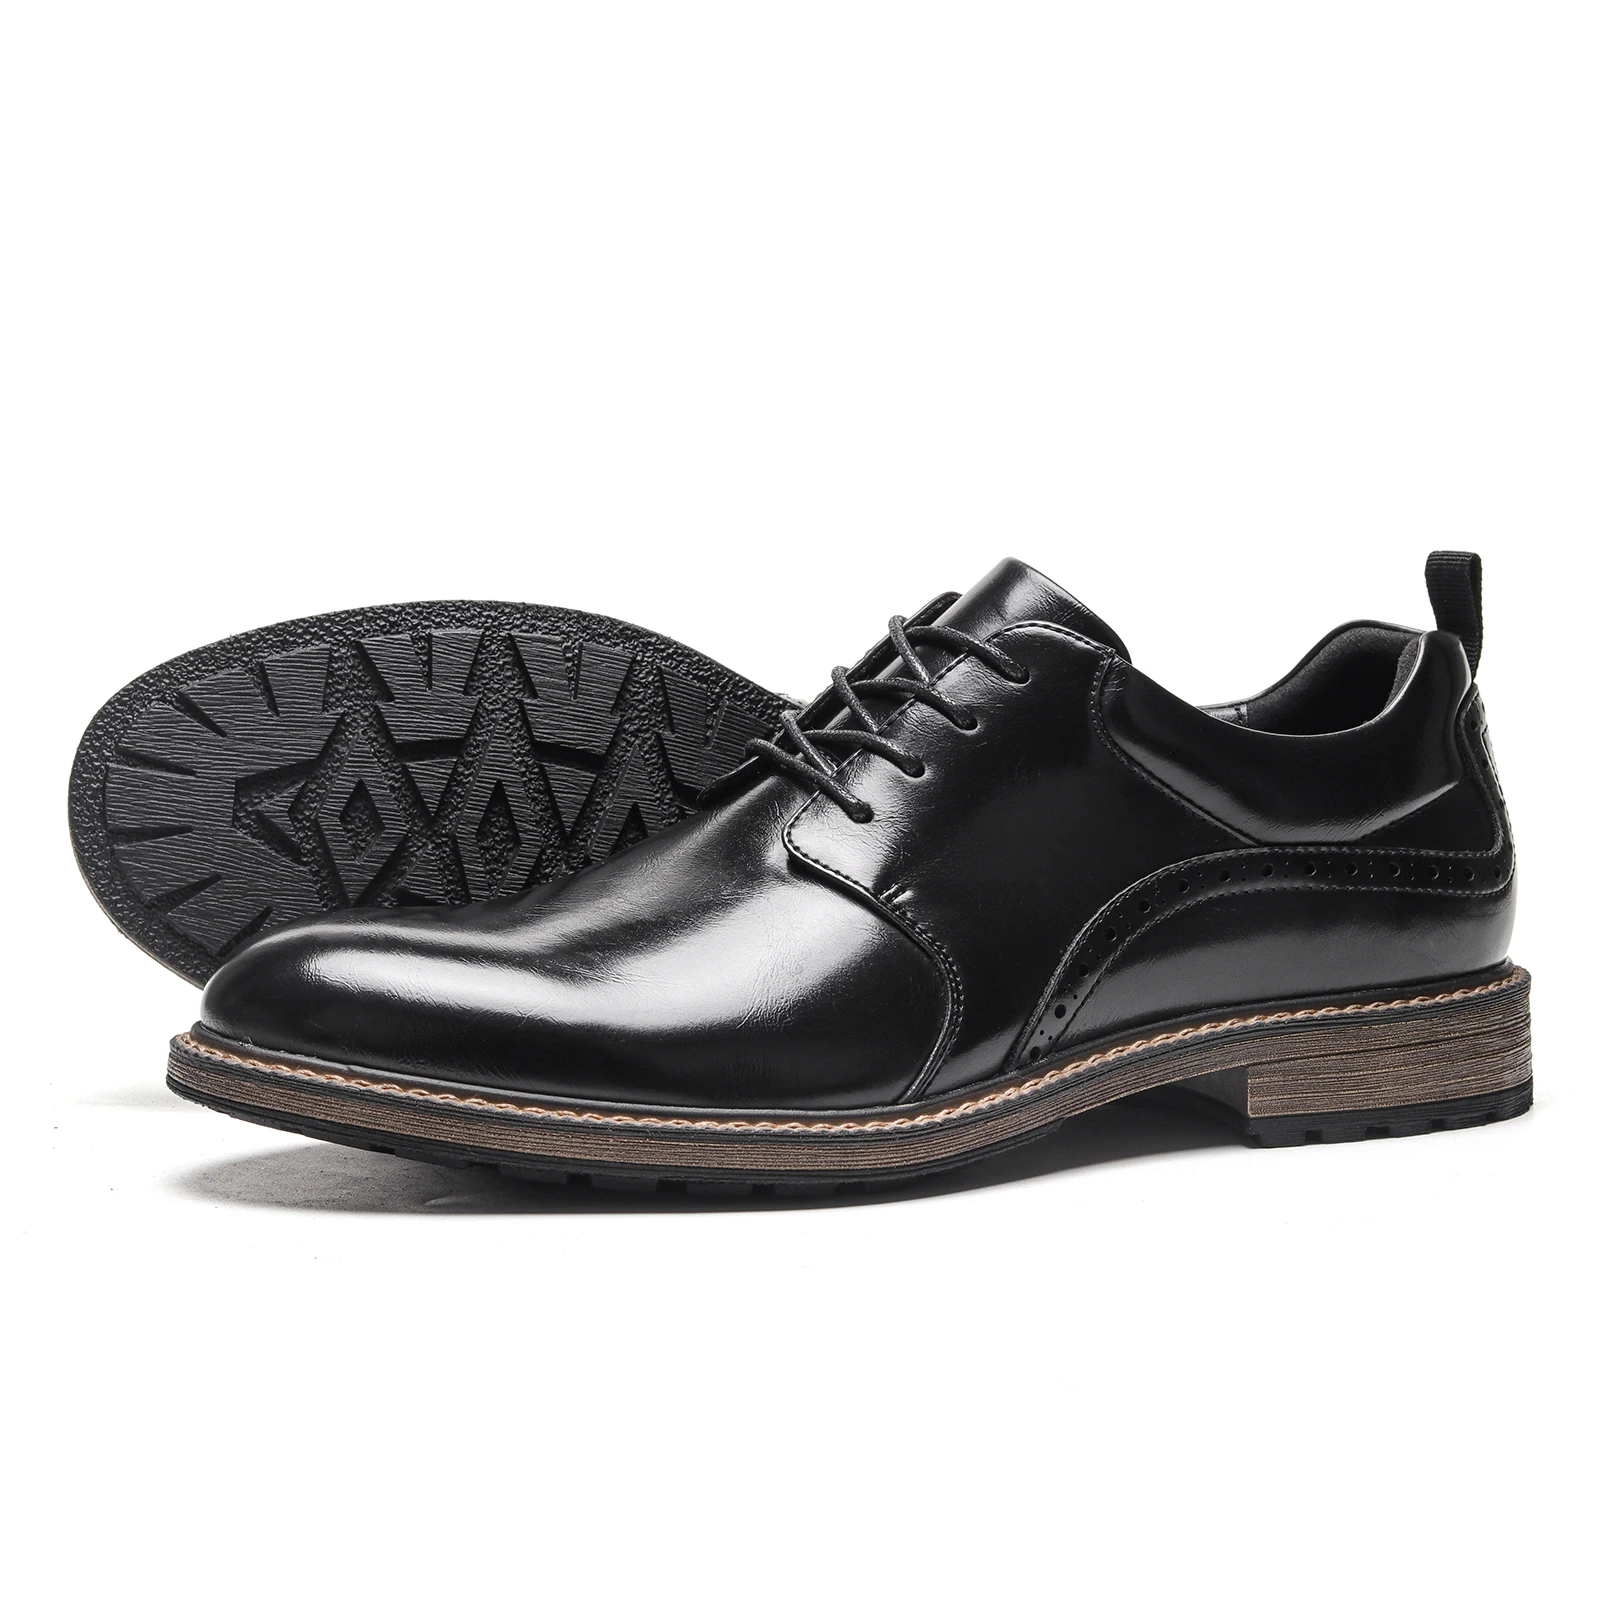 Casual Shoes Men Brand Fashion Comfortable Luxury Shoes #Al727 - $92.26